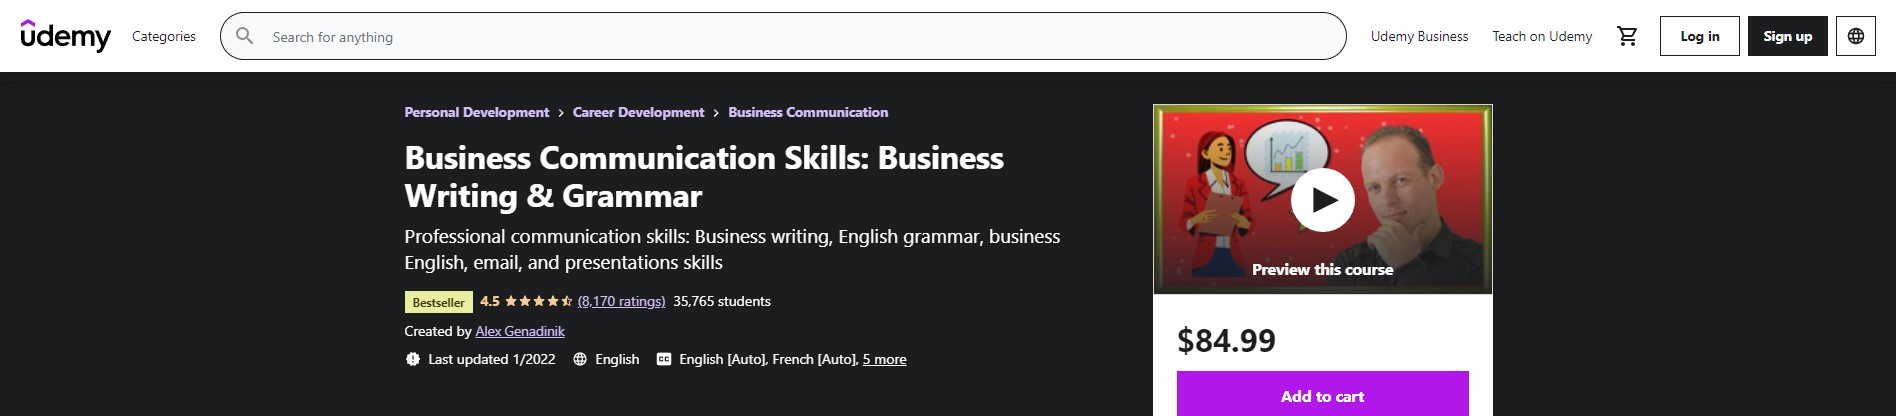 Business Communication Skills Course Udemy